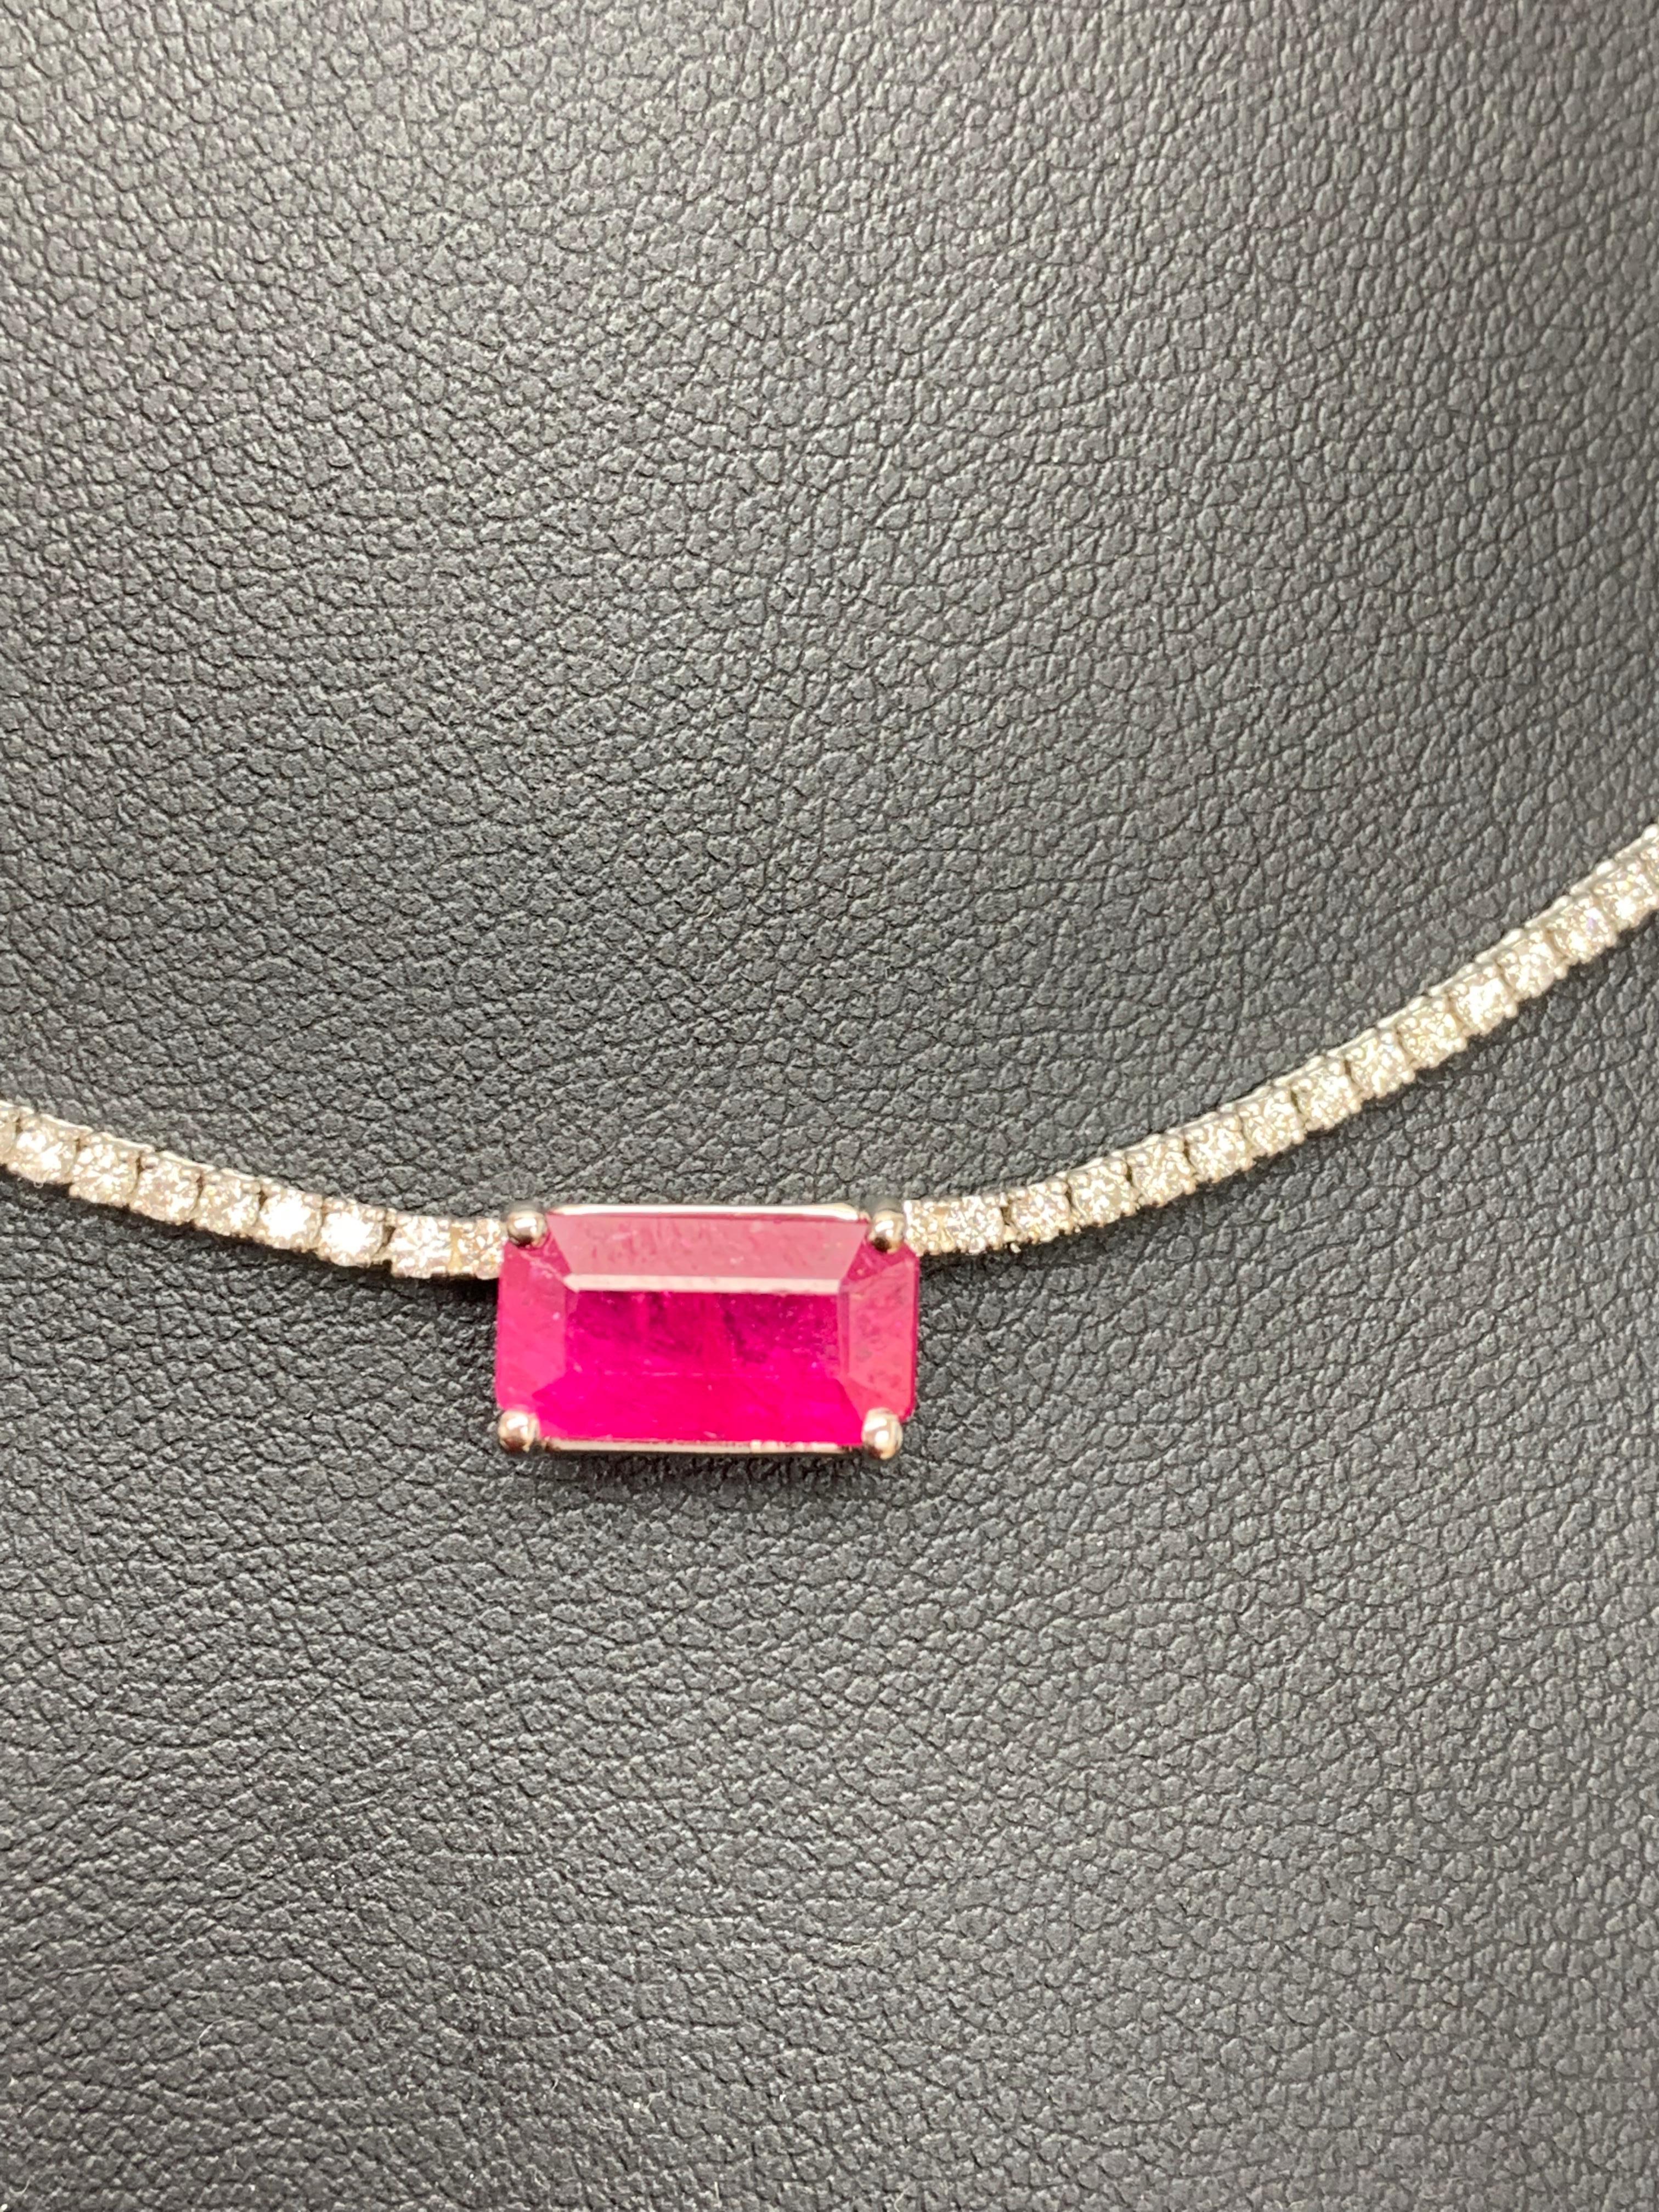 emerald cut ruby pendant